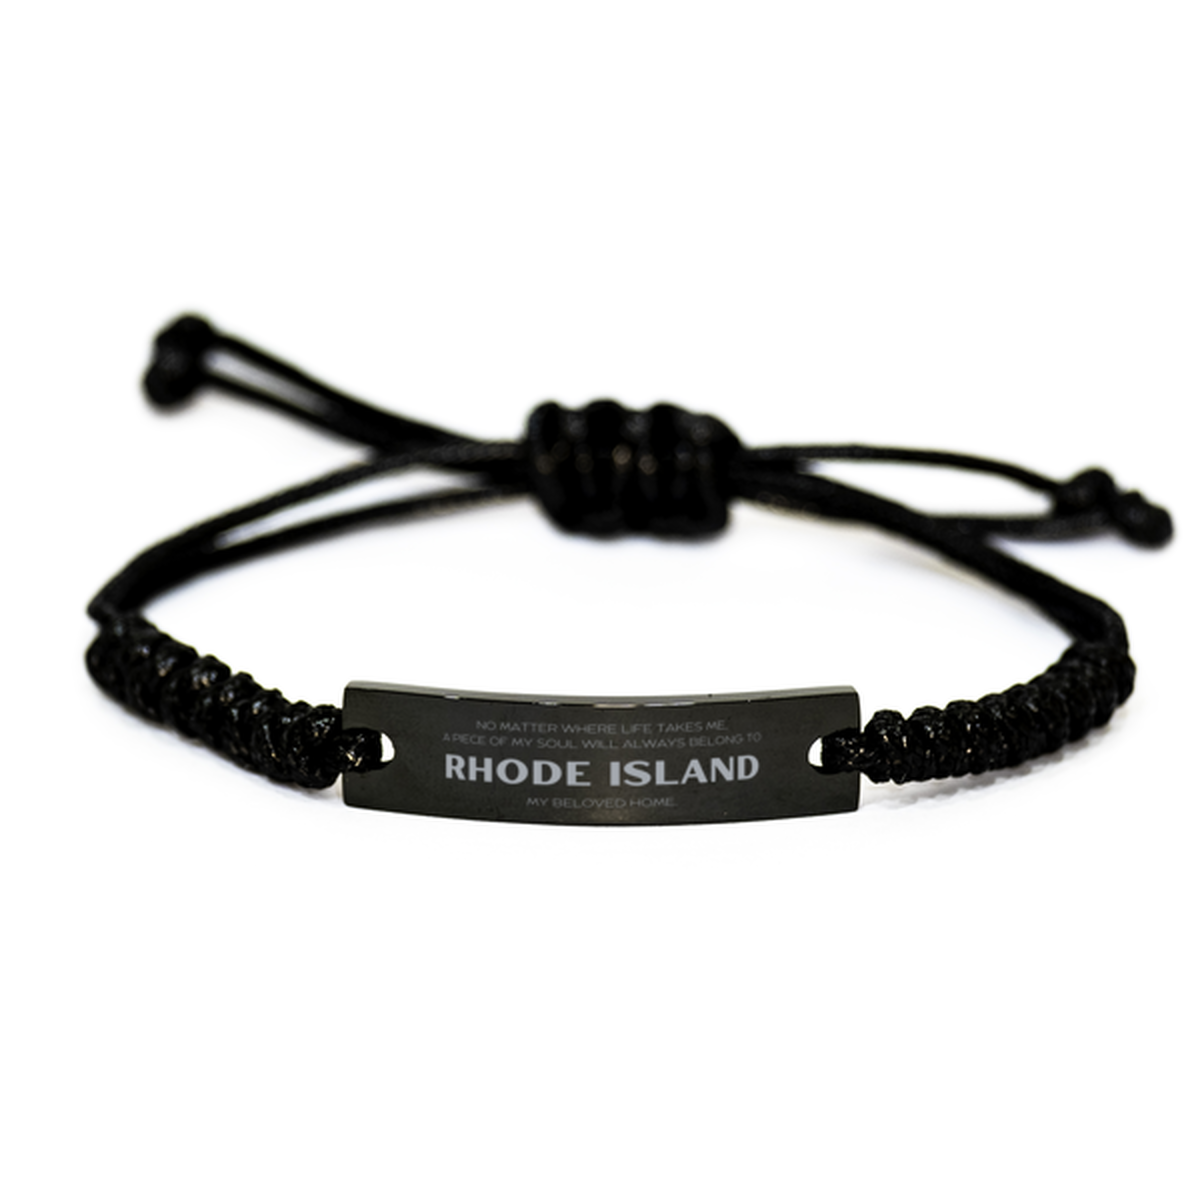 Love Rhode Island State Gifts, My soul will always belong to Rhode Island, Proud Black Rope Bracelet, Birthday Unique Gifts For Rhode Island Men, Women, Friends